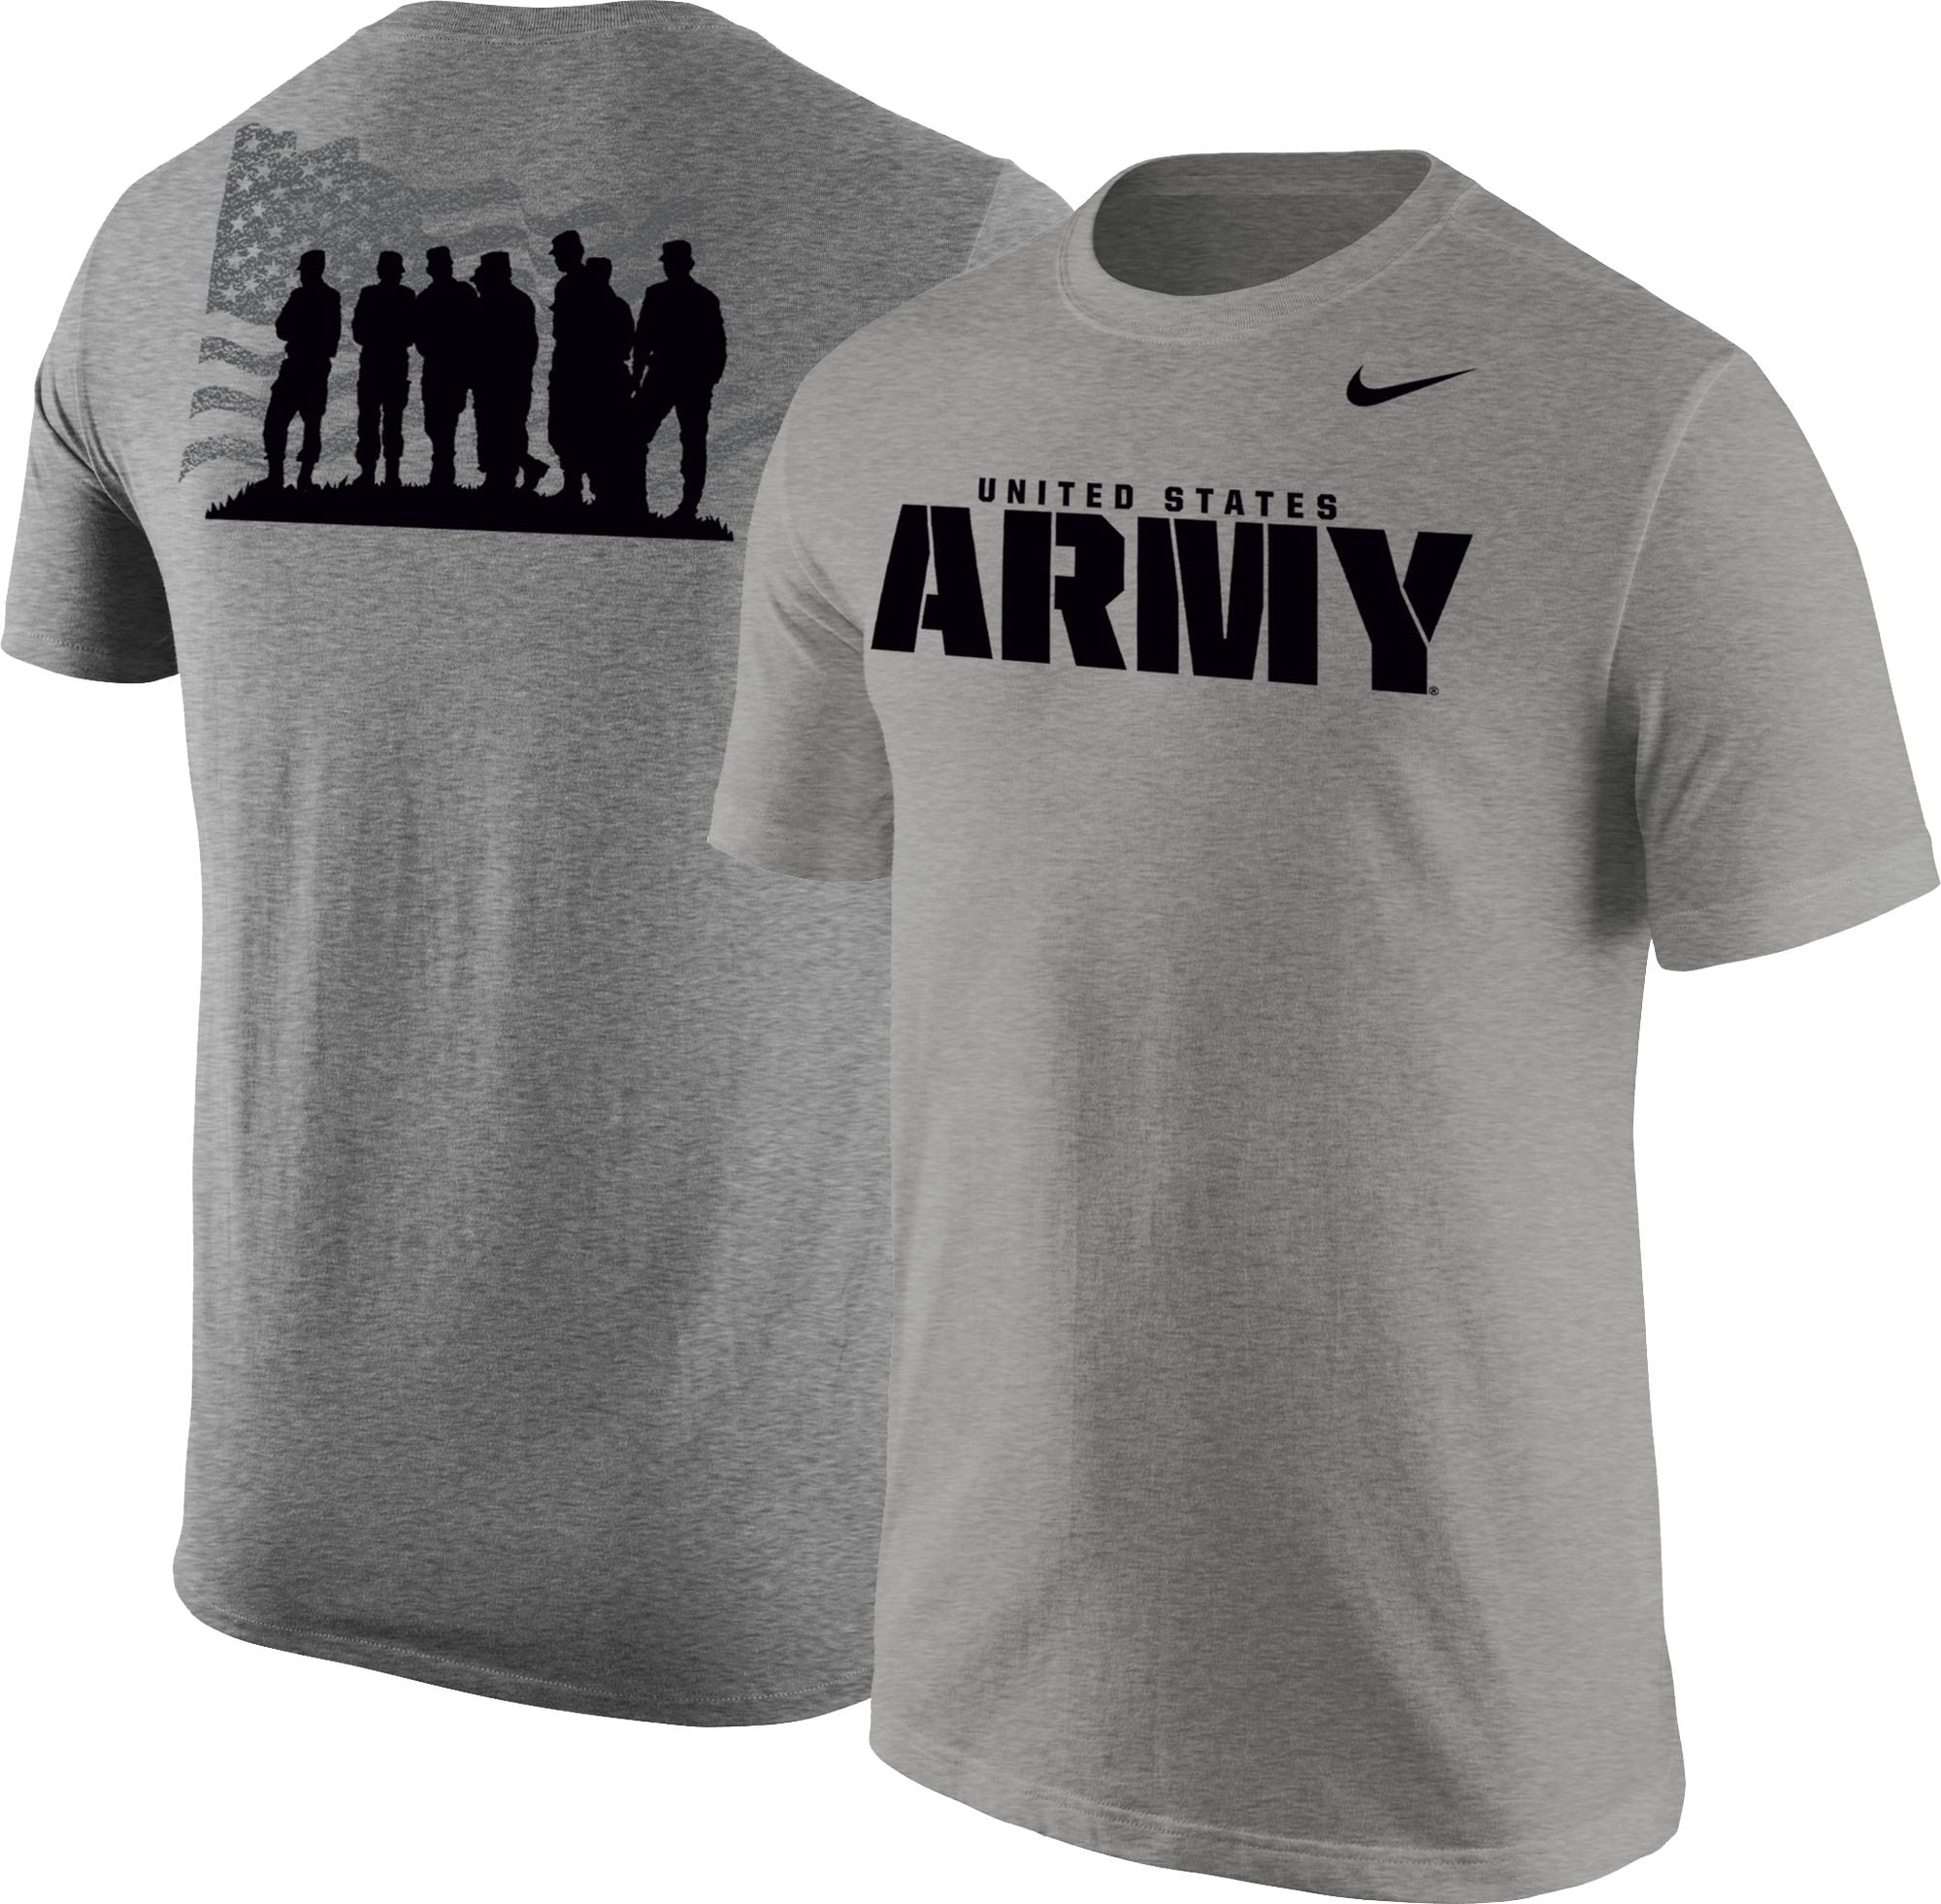 Army Shirts Walmart - Army Military